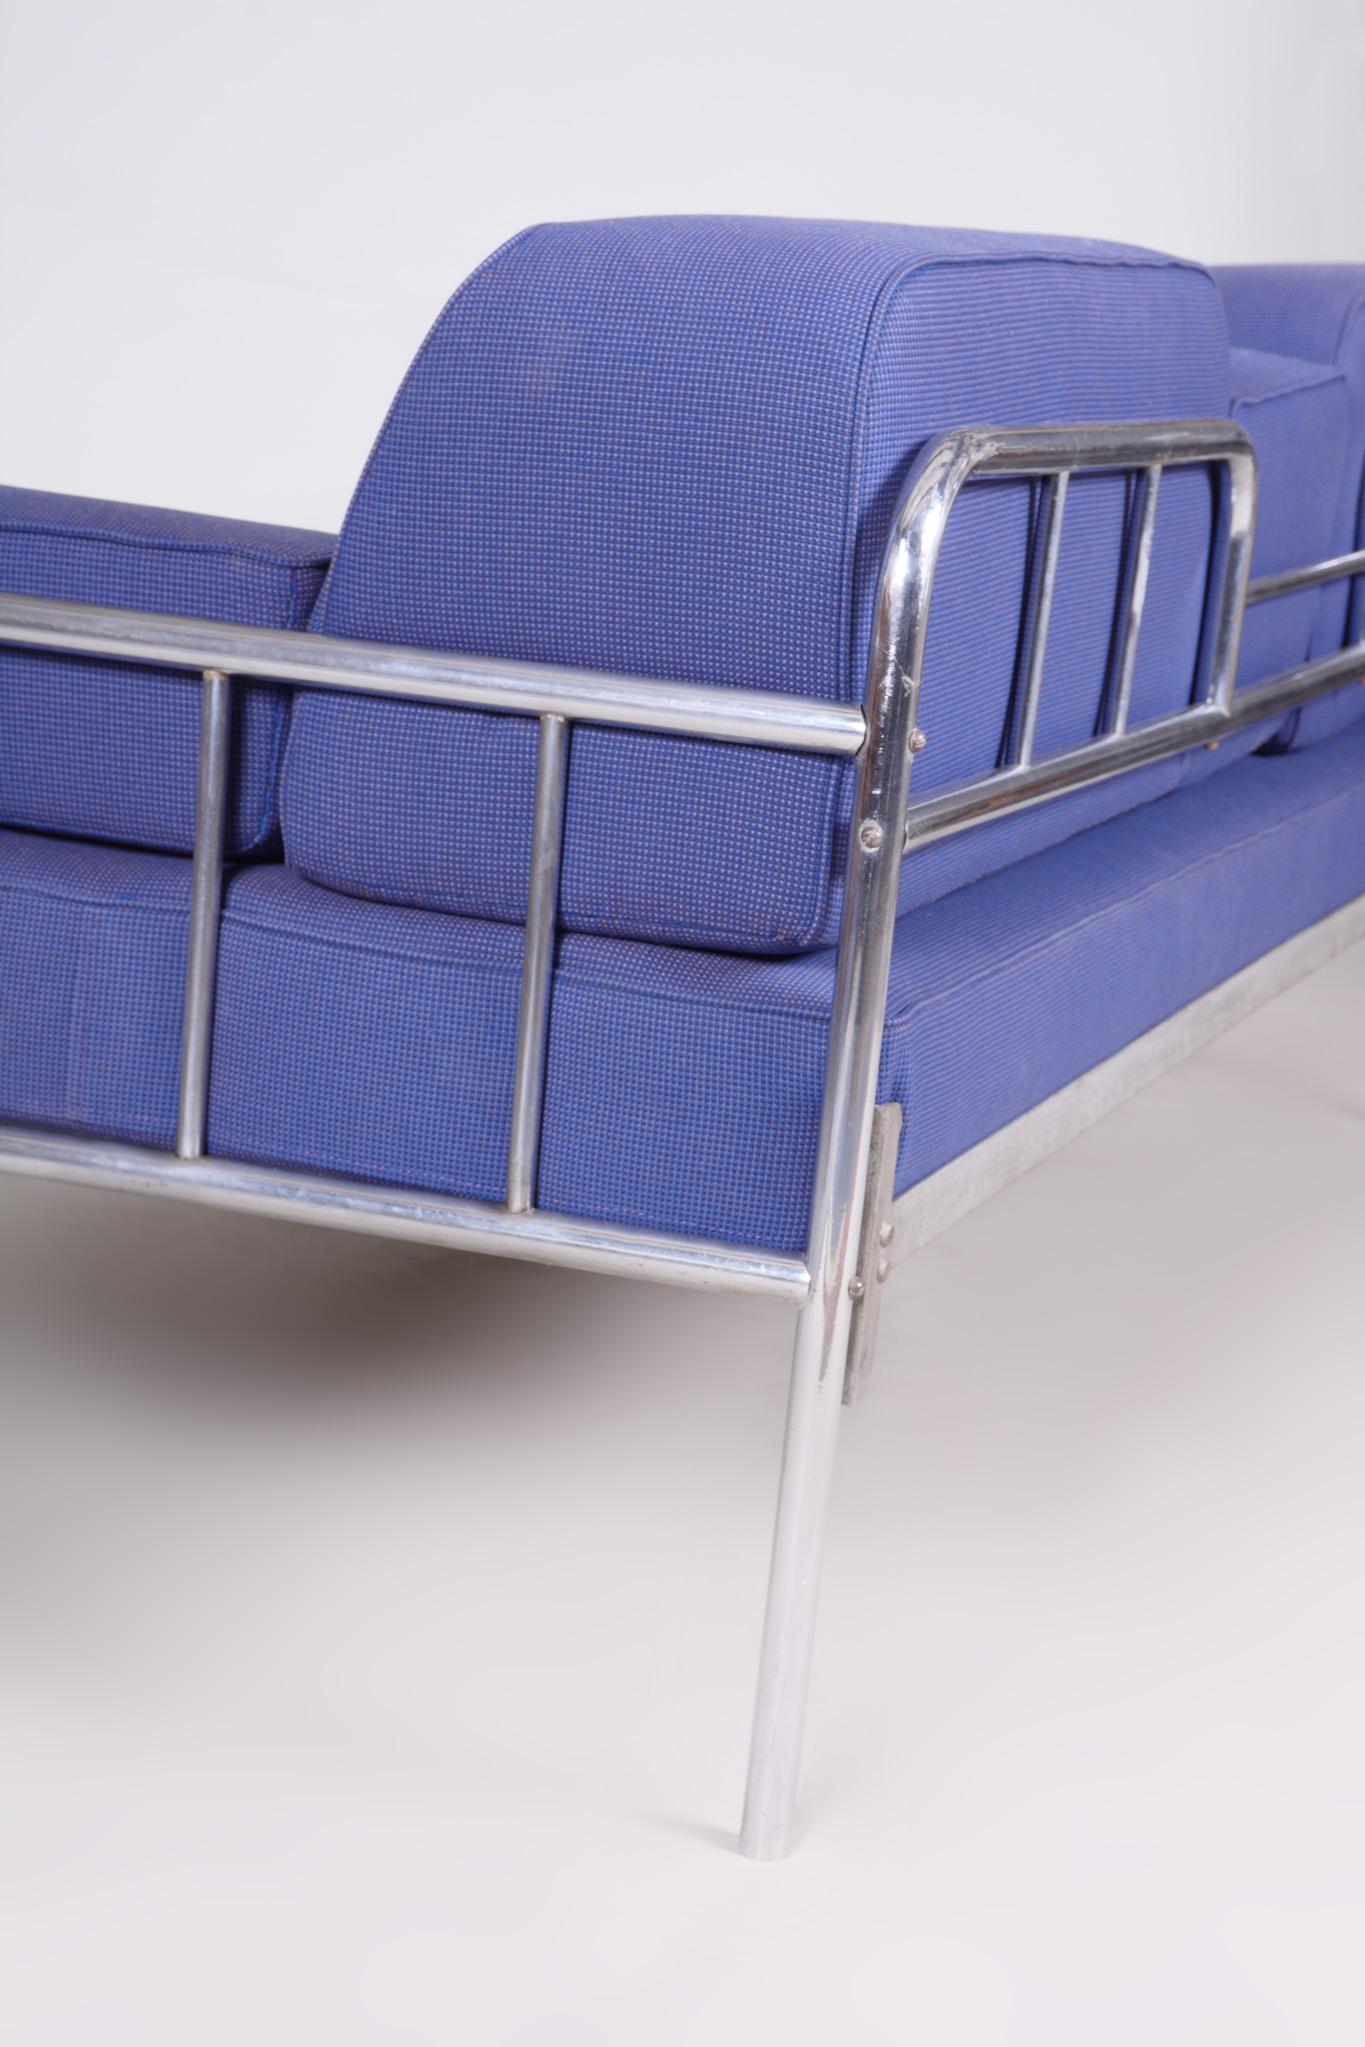 Fully Restored Blue Bauhaus Chrome Sofa, 1930s Czechia For Sale 2